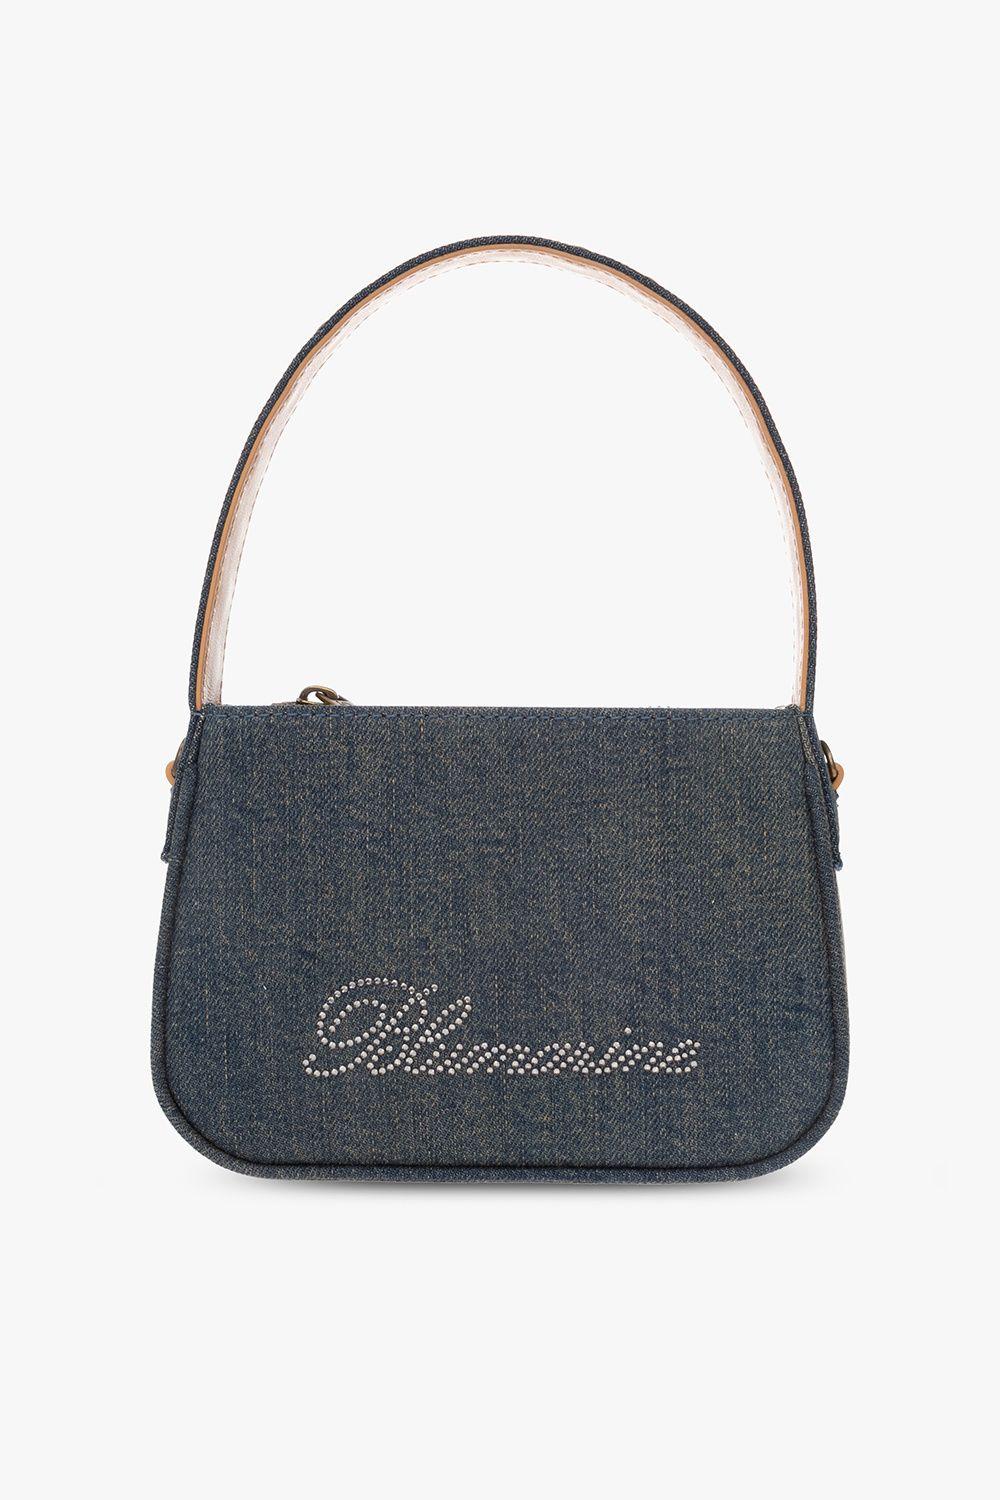 Blumarine Denim Shoulder Bag in Blue | Lyst